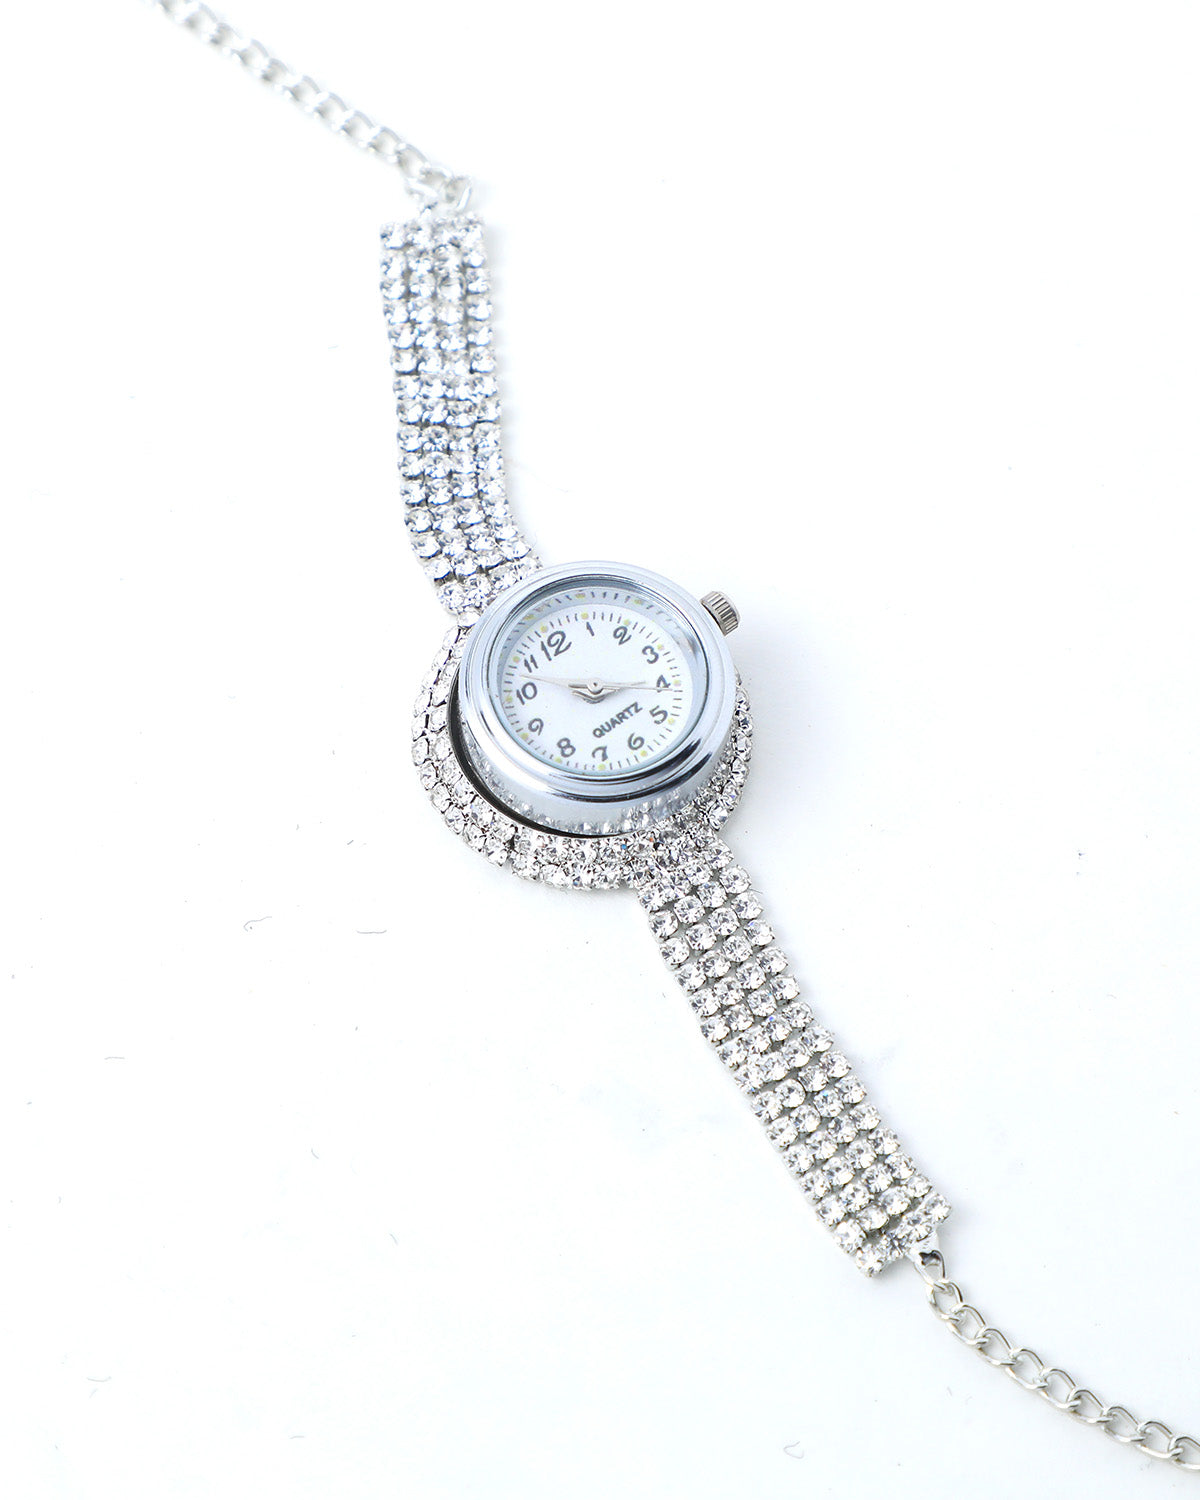 Black Agate & Crystal Charm Bracelet Watch